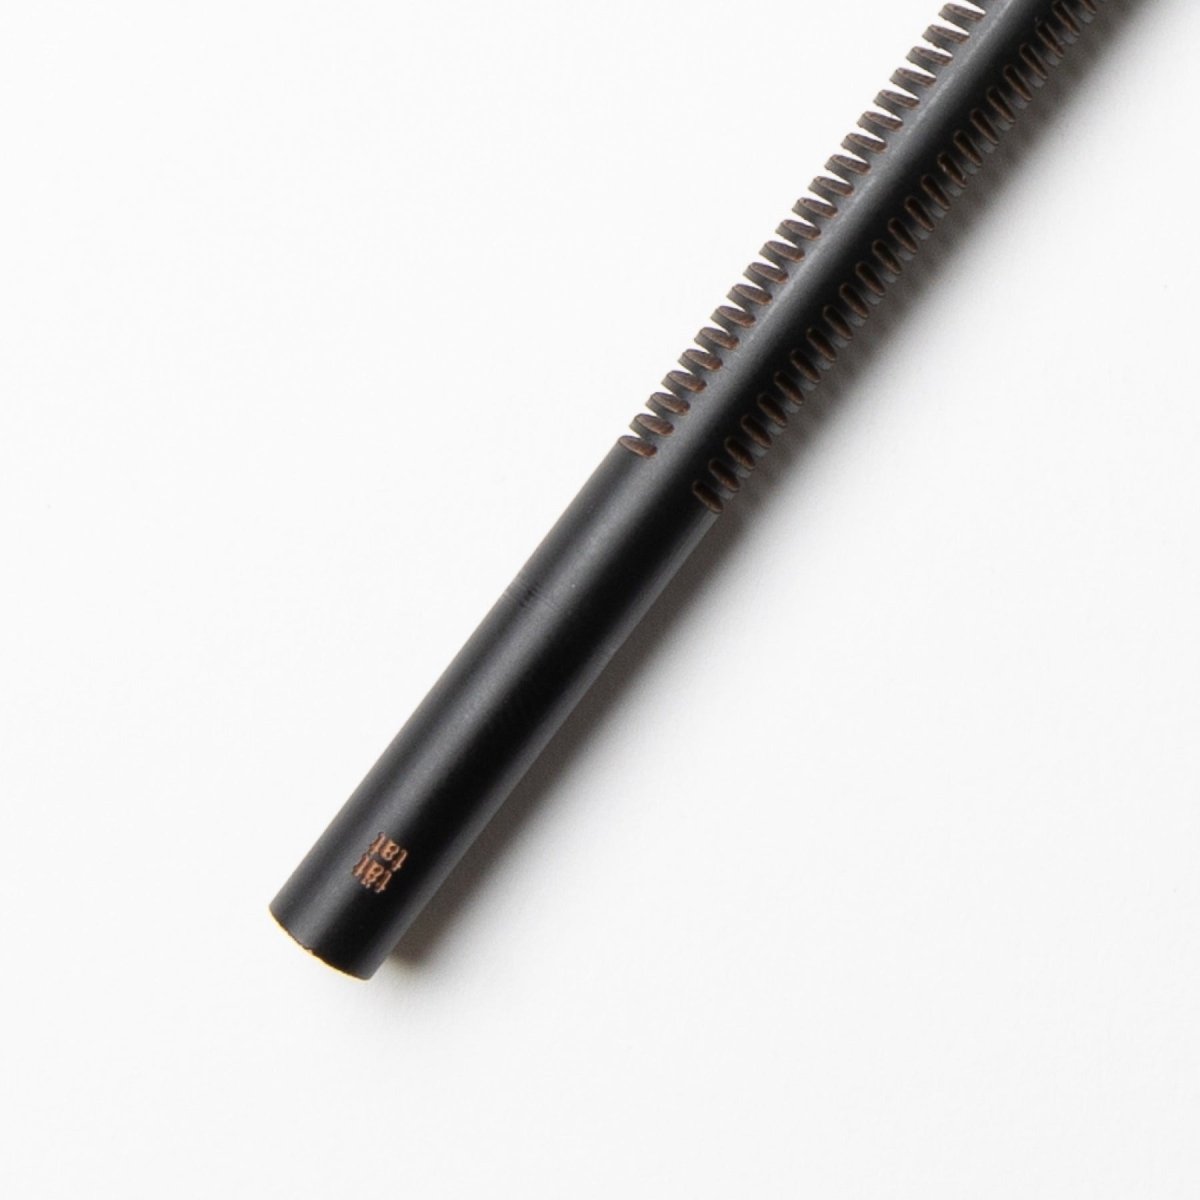 Tät-Tat - Bleistift Fisch Pencil - Autotype Design Tools